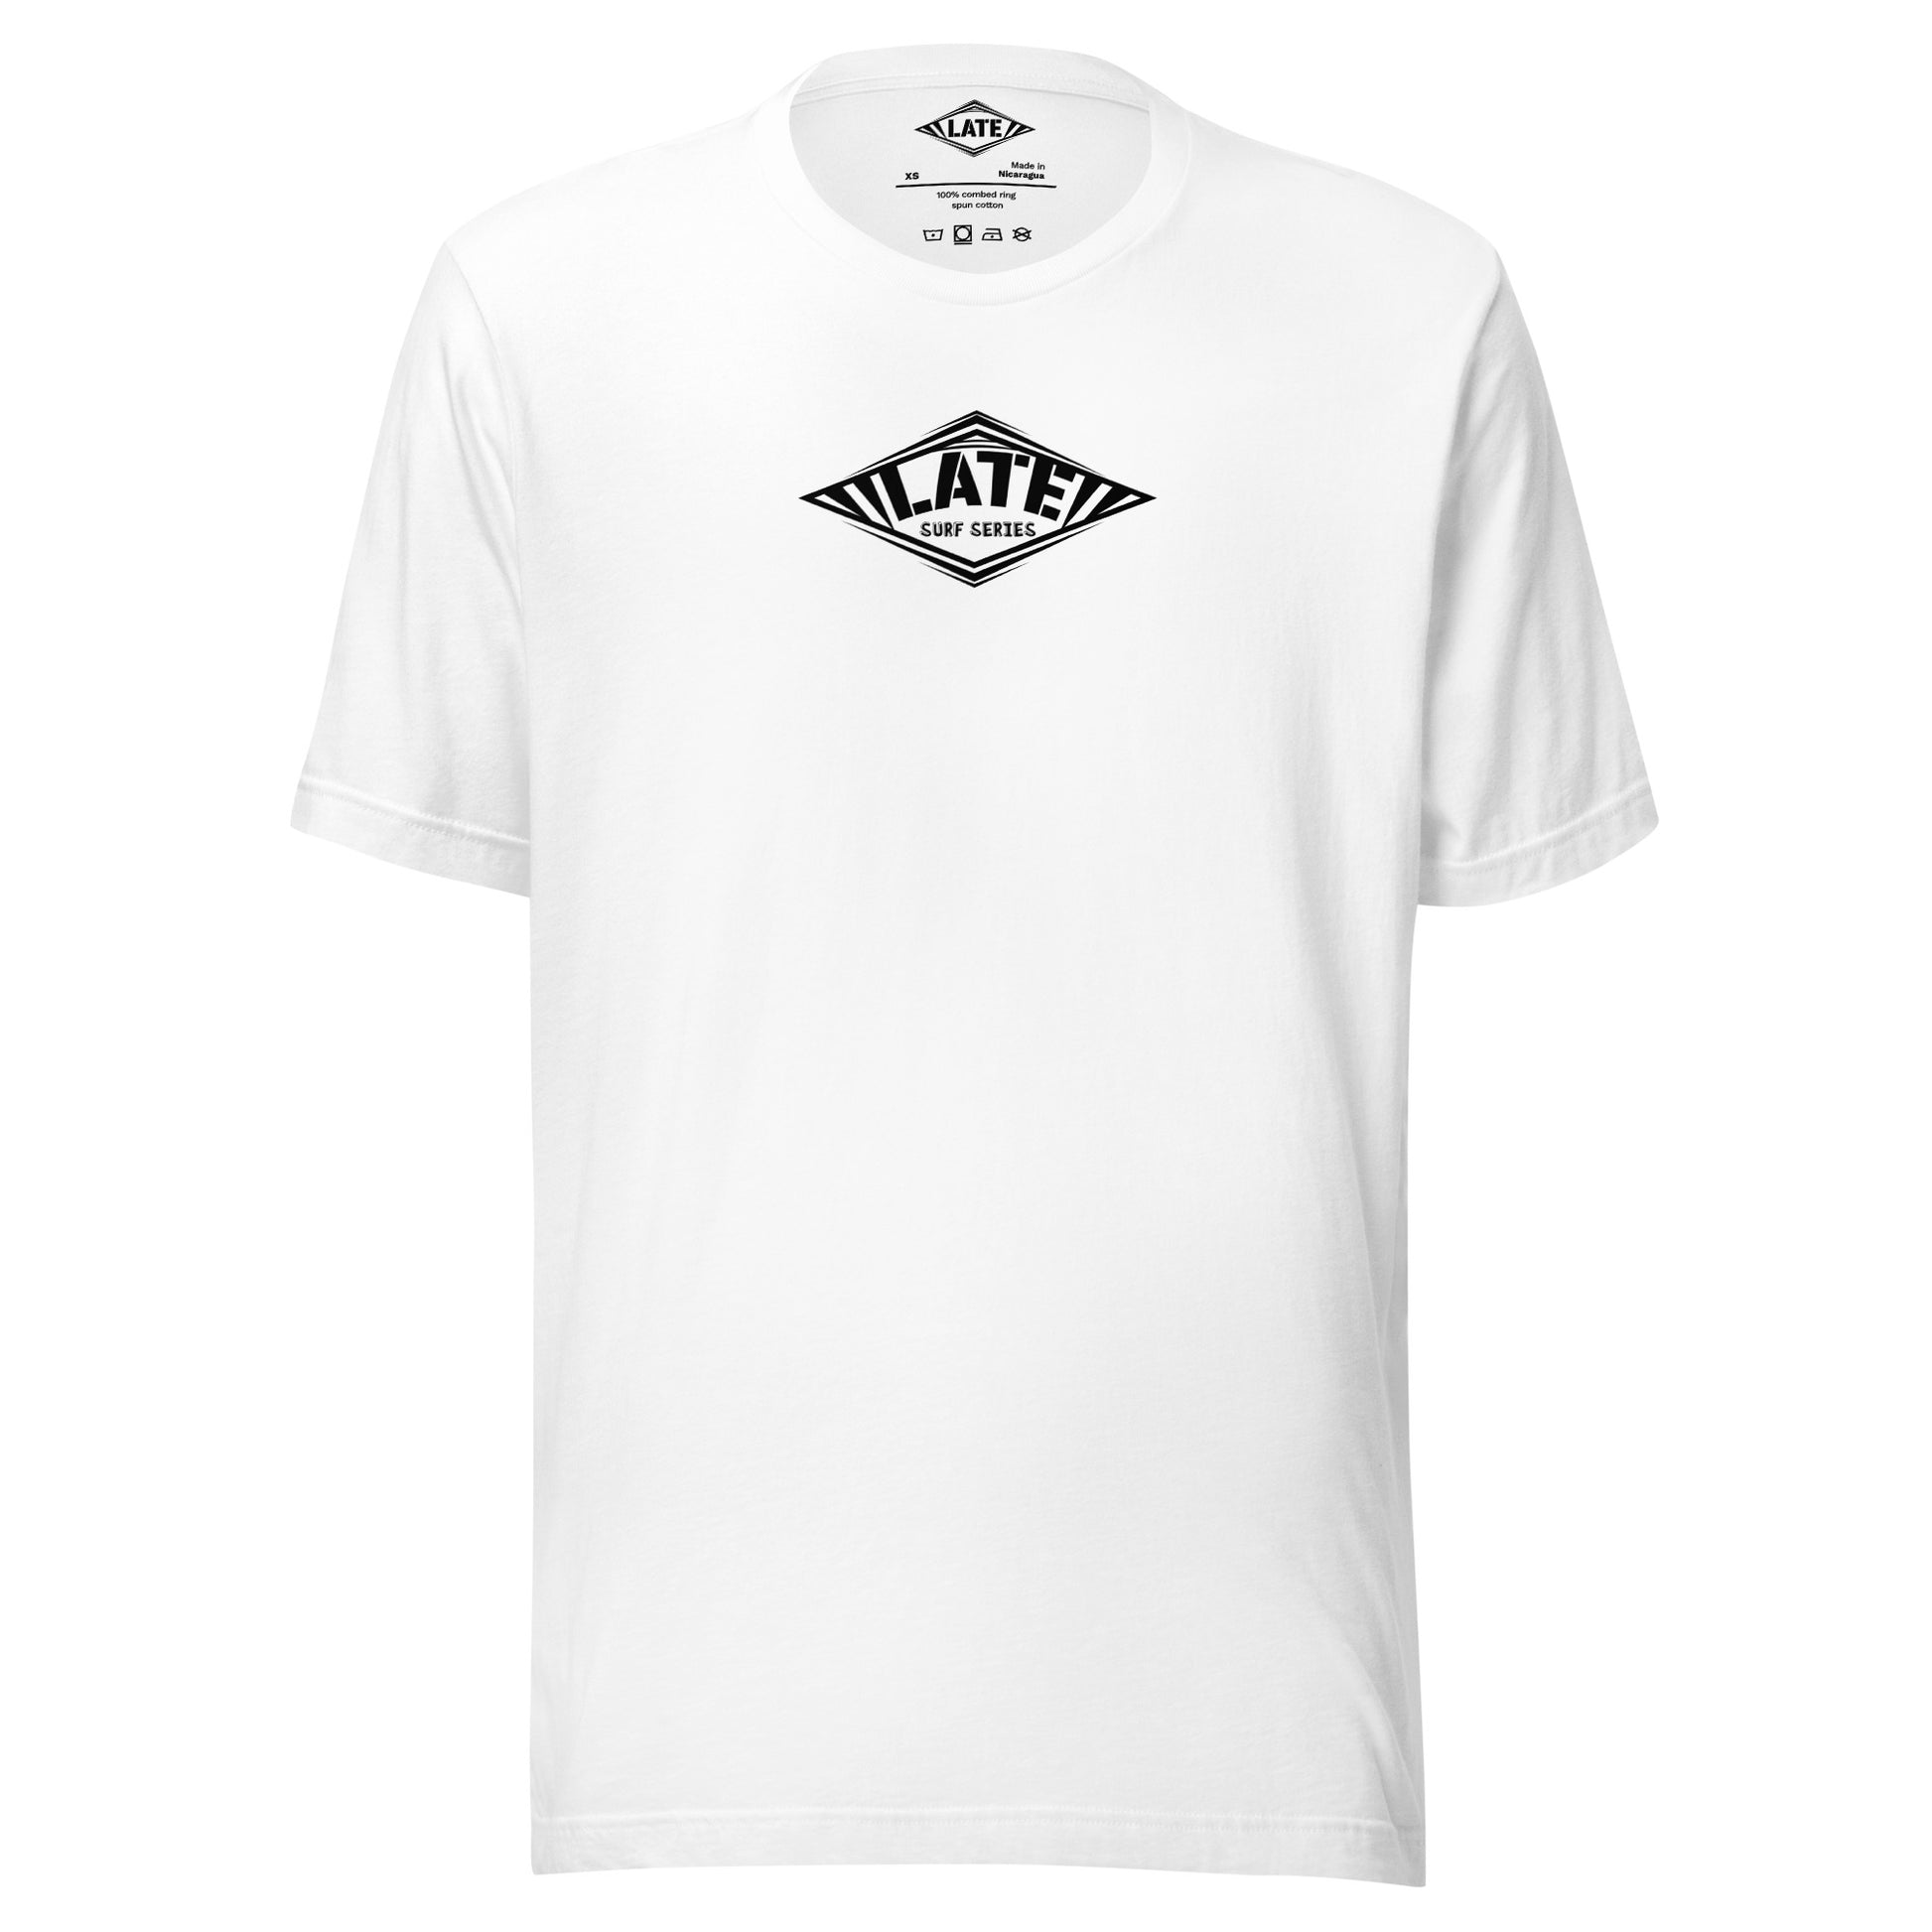 T-Shirt Take On The Elements style hurley texte surf series, et logo Late tshirt de face couleur blanc